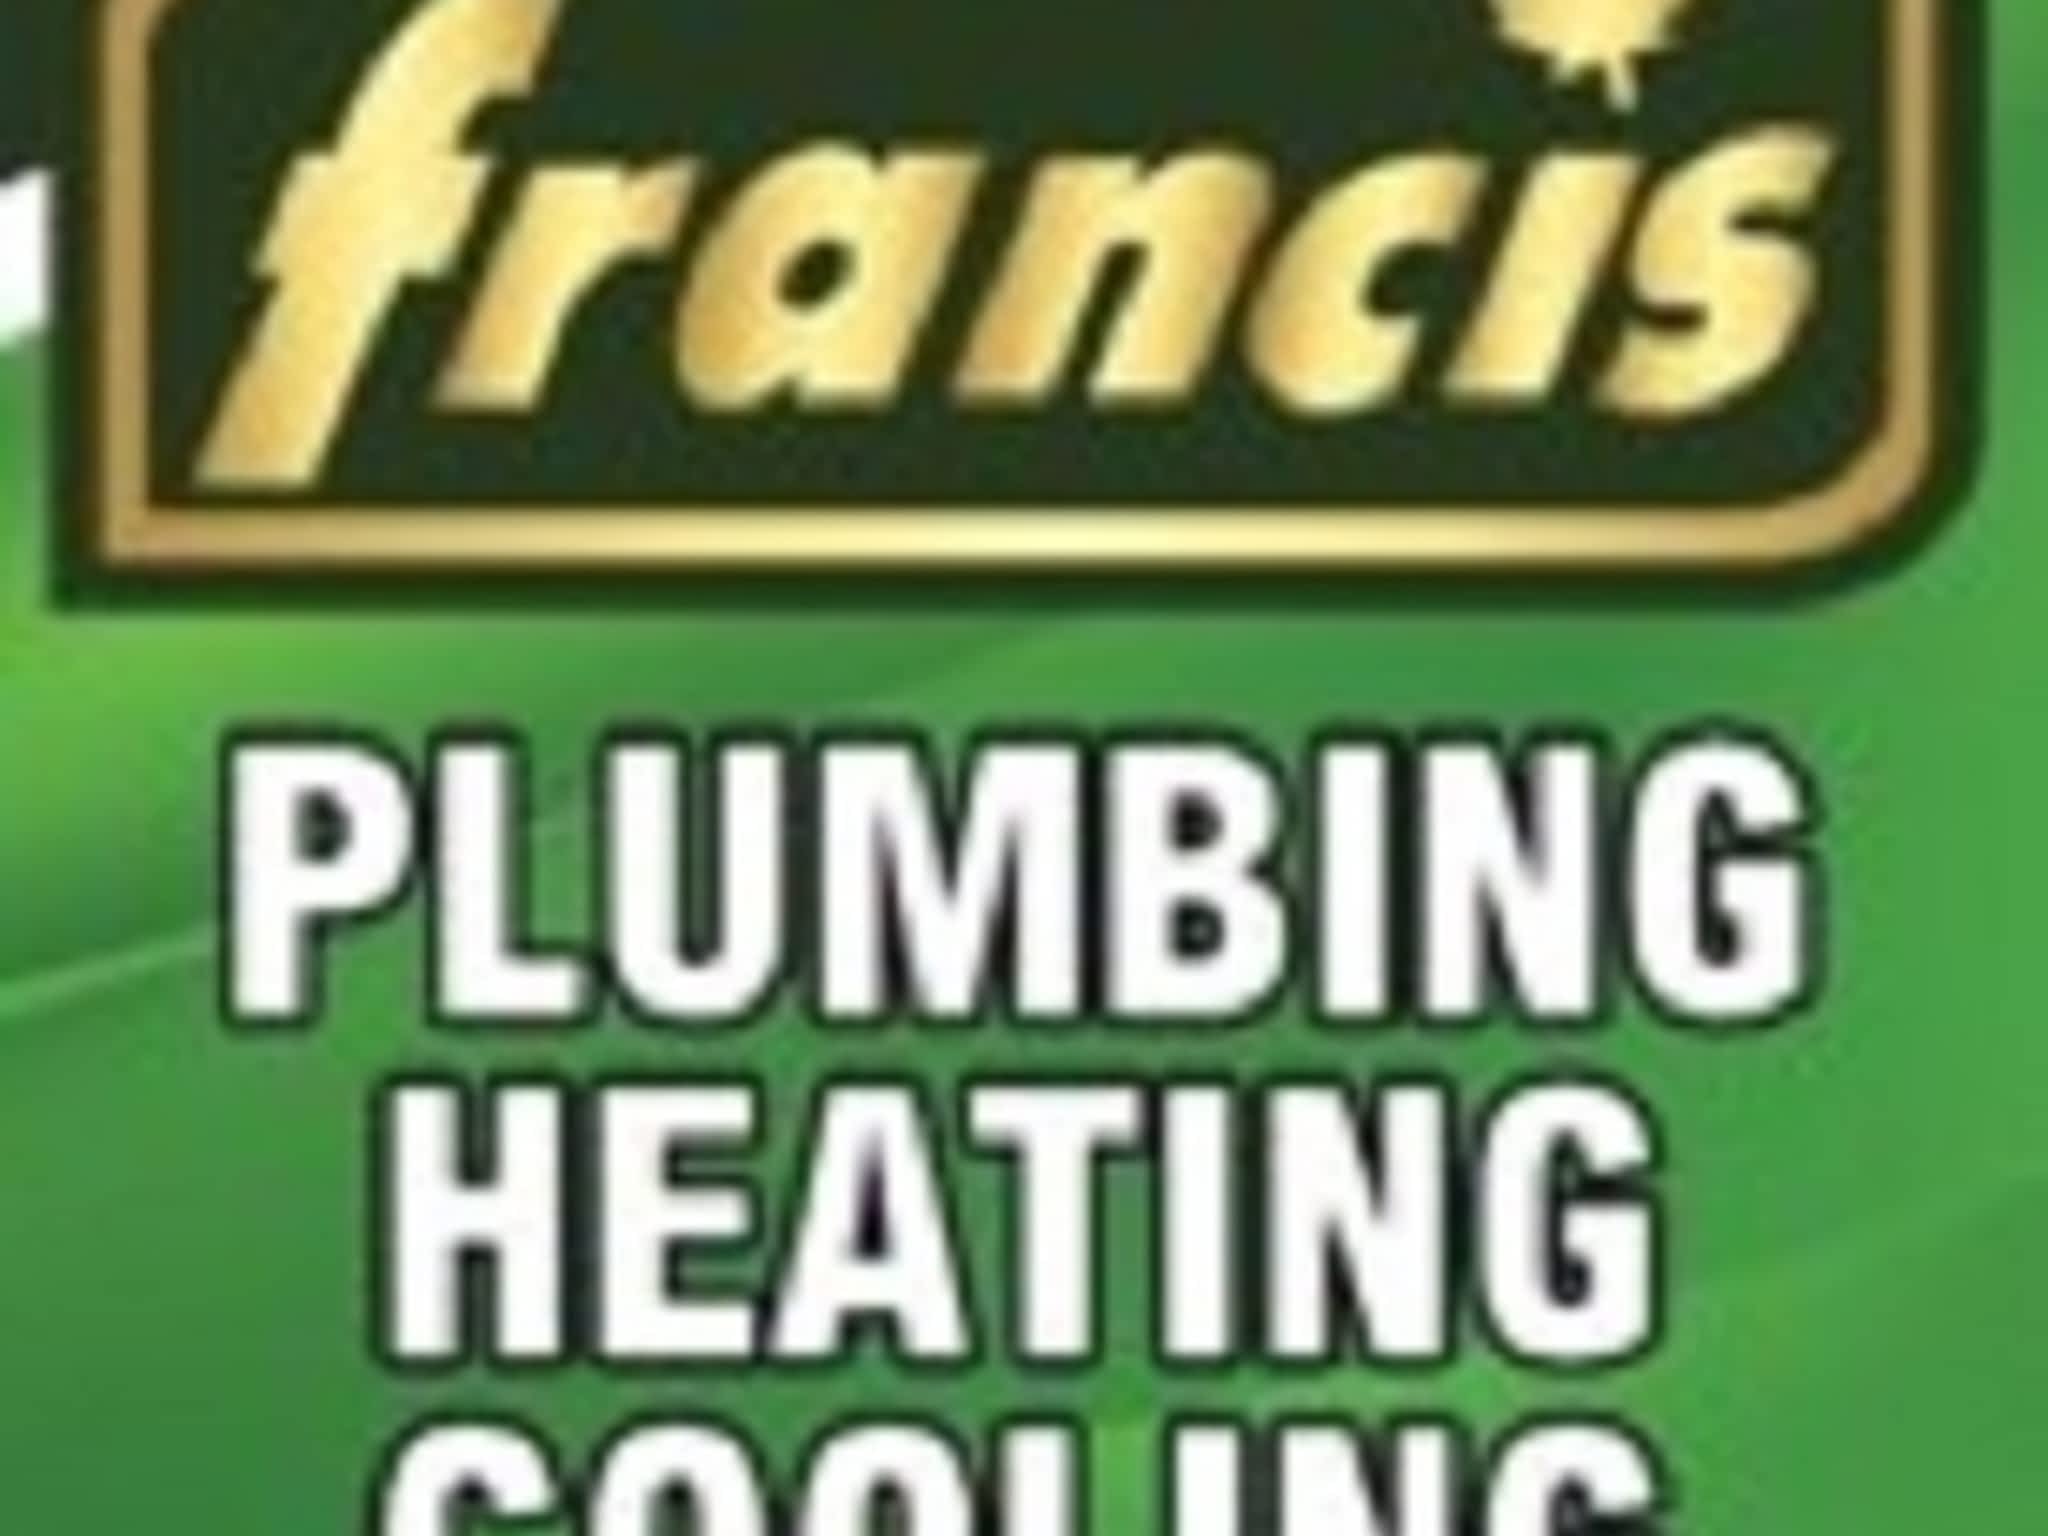 photo Francis Plumbing Heating & Cooling